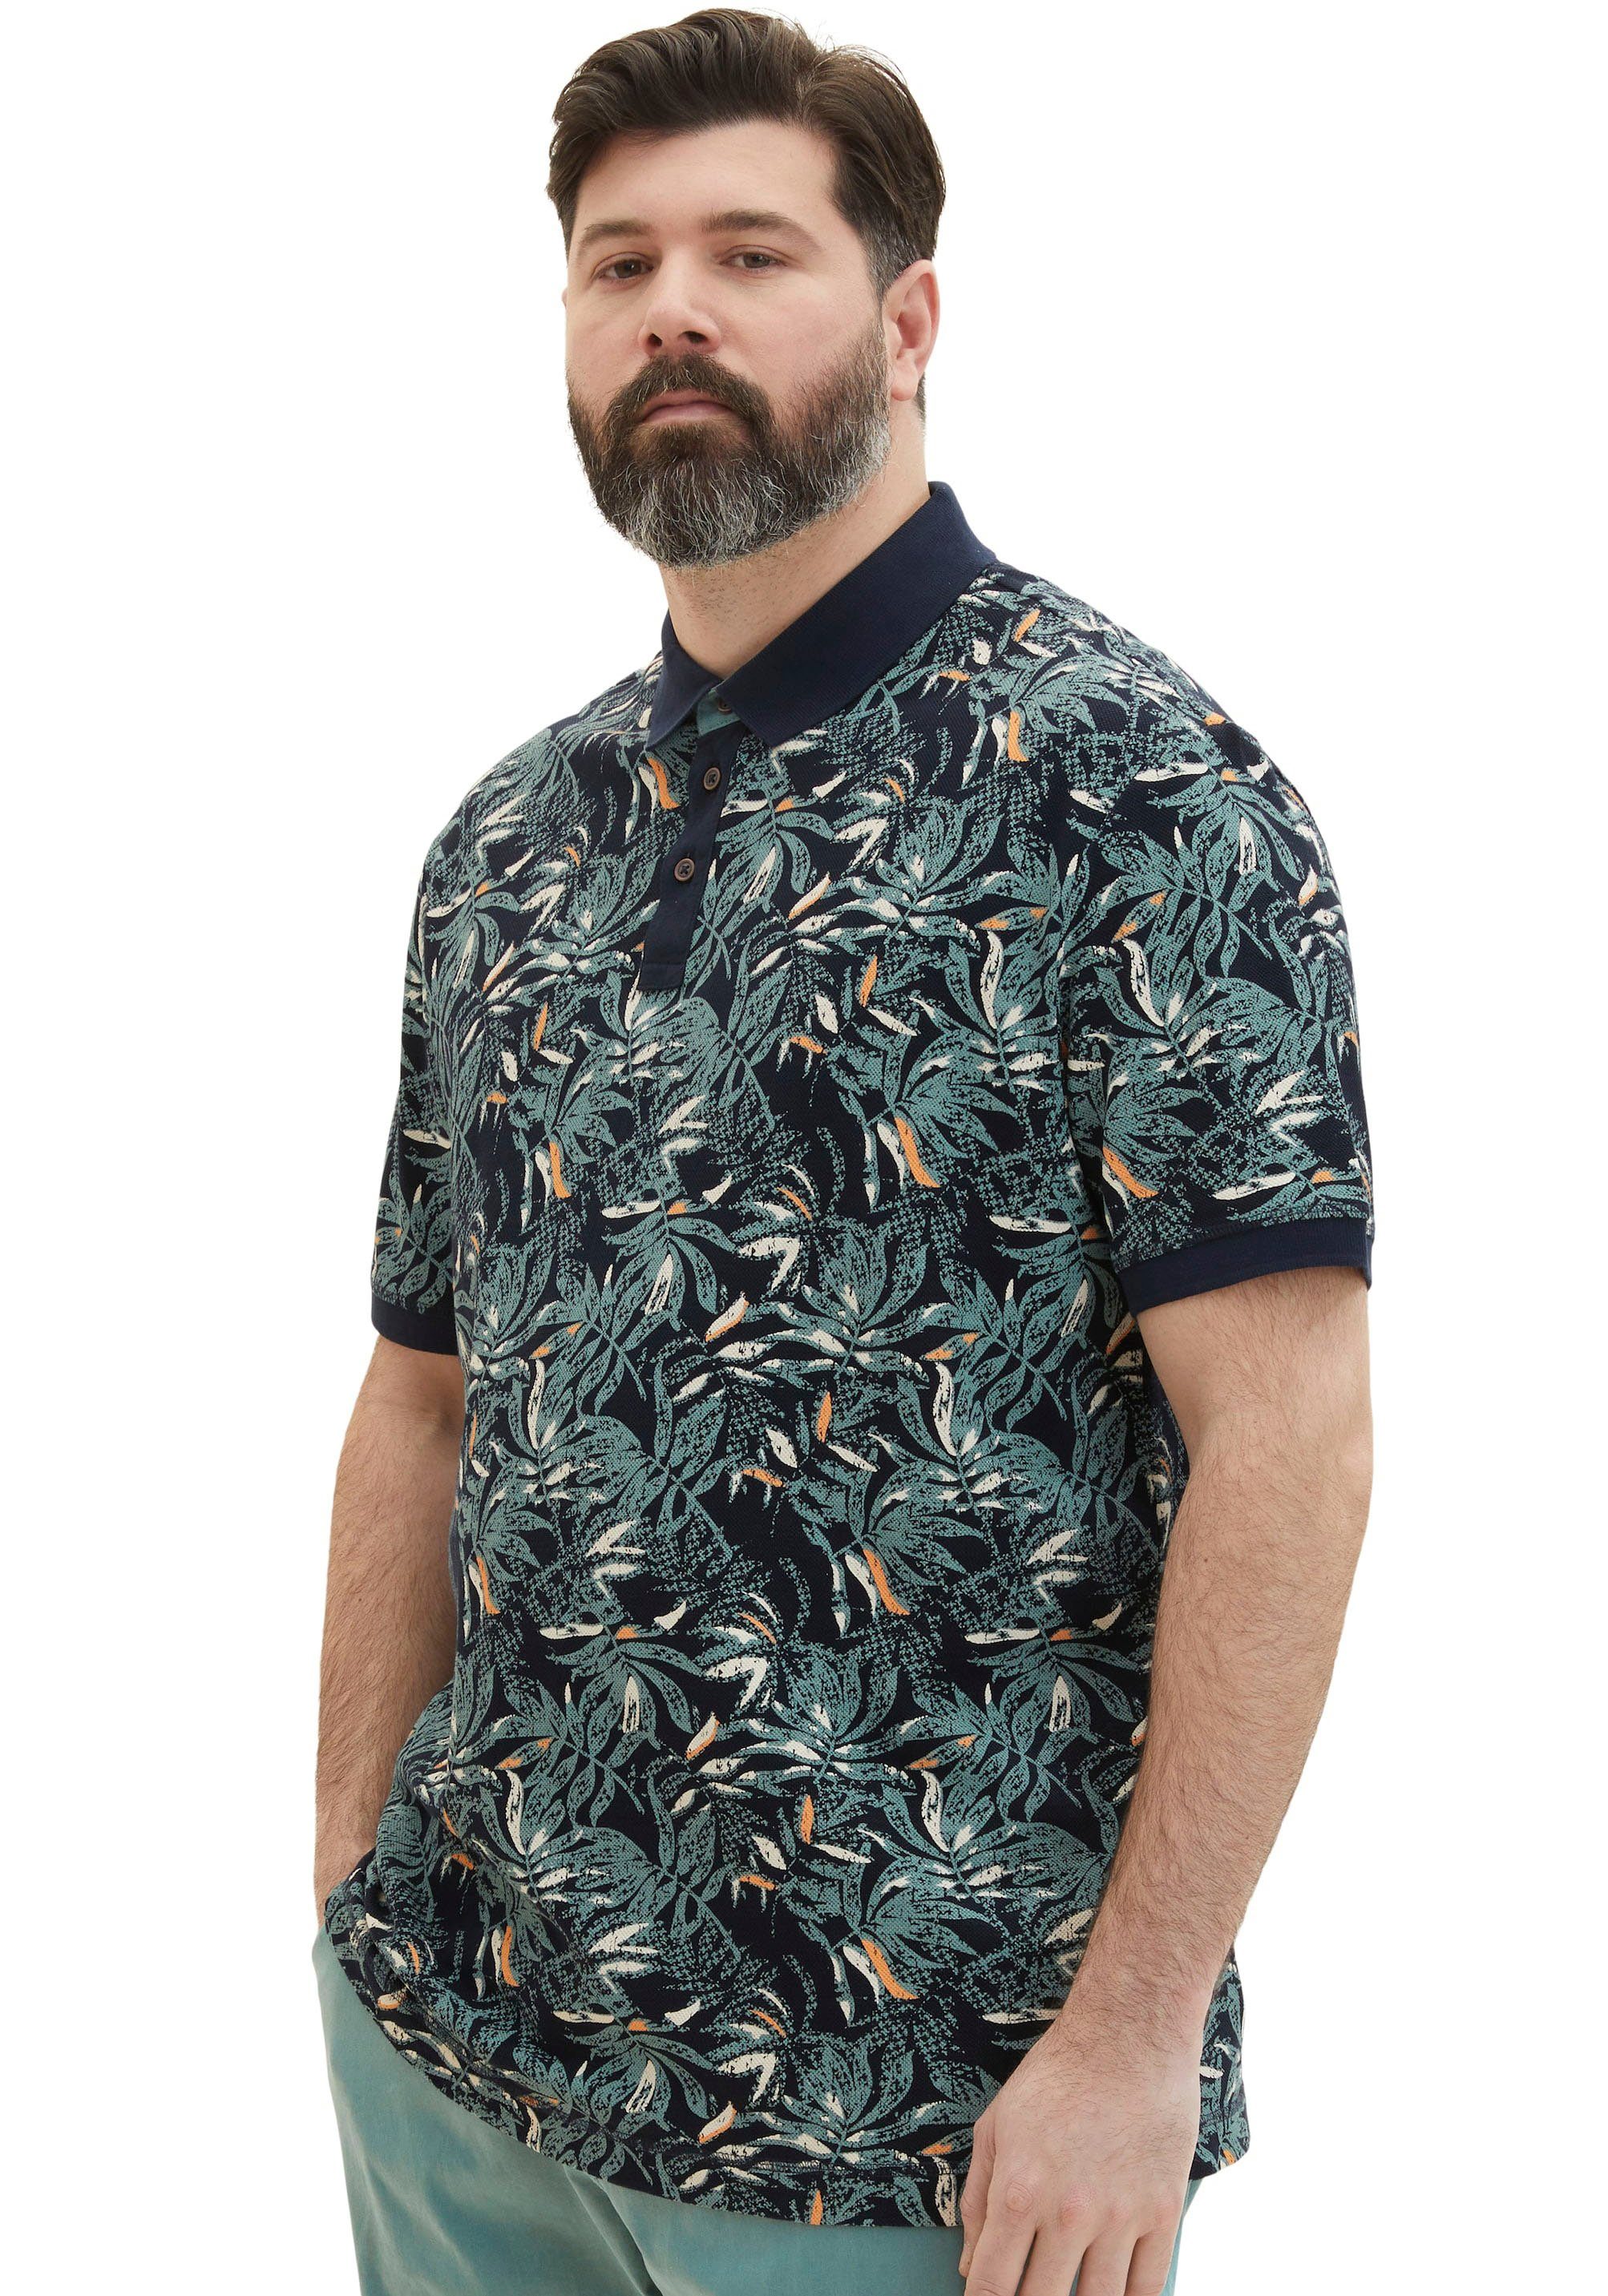 TOM TAILOR PLUS Poloshirt mit floralem Print navy green big leaf design